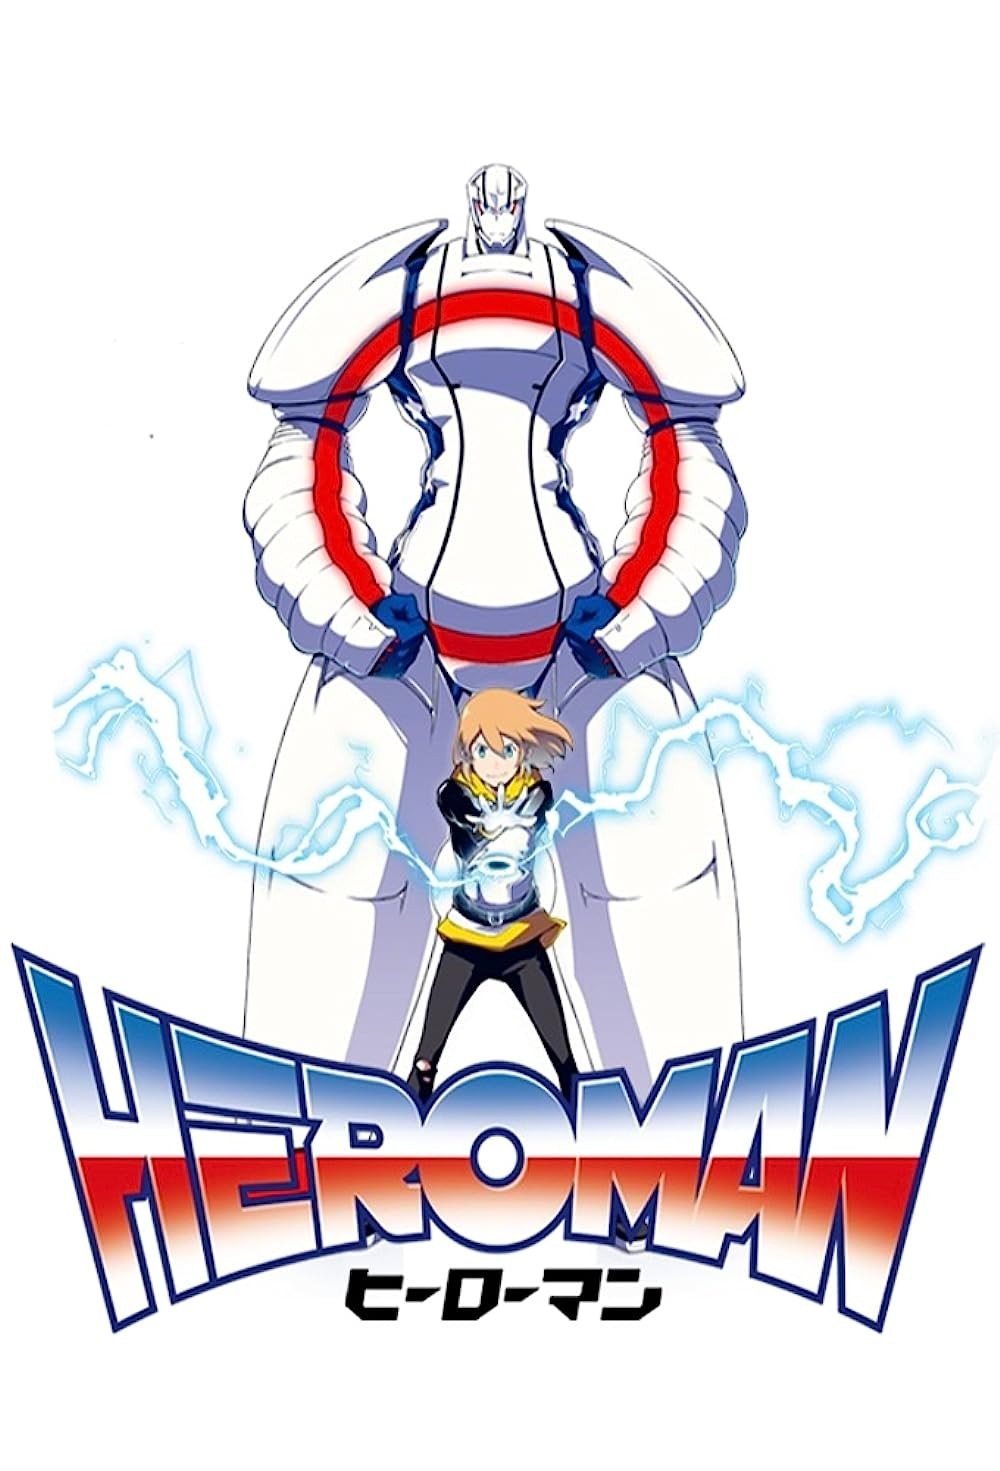 Day 277: Heroman AKA The Stan Lee Anime – Jonah's Daily Rants